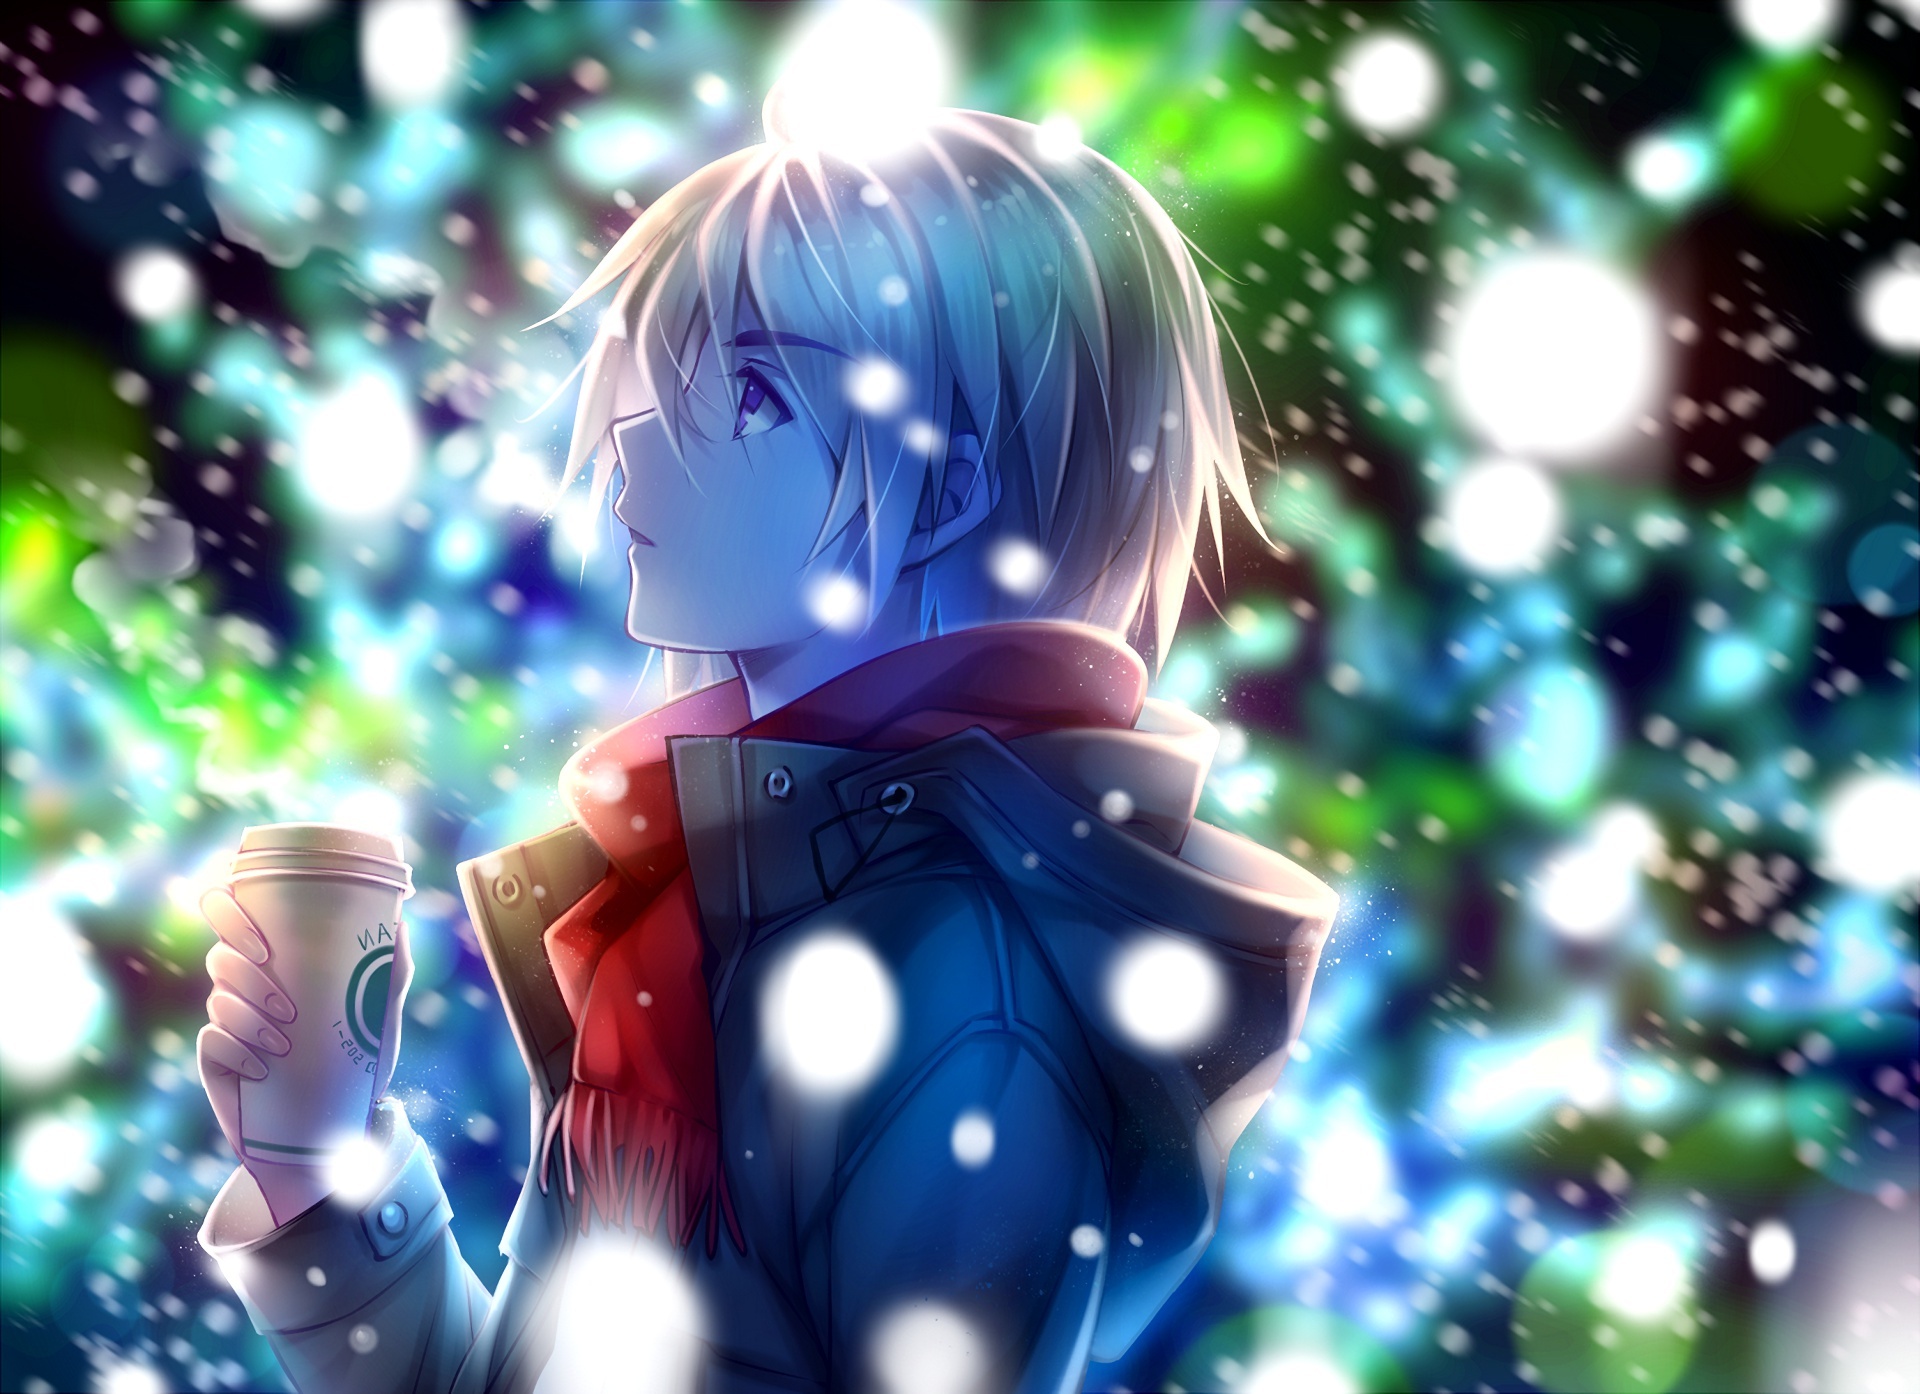 Wallpaper Snow, Winter, Coffee, Anime Boy, Profile View, Red Scarf:1920x1394